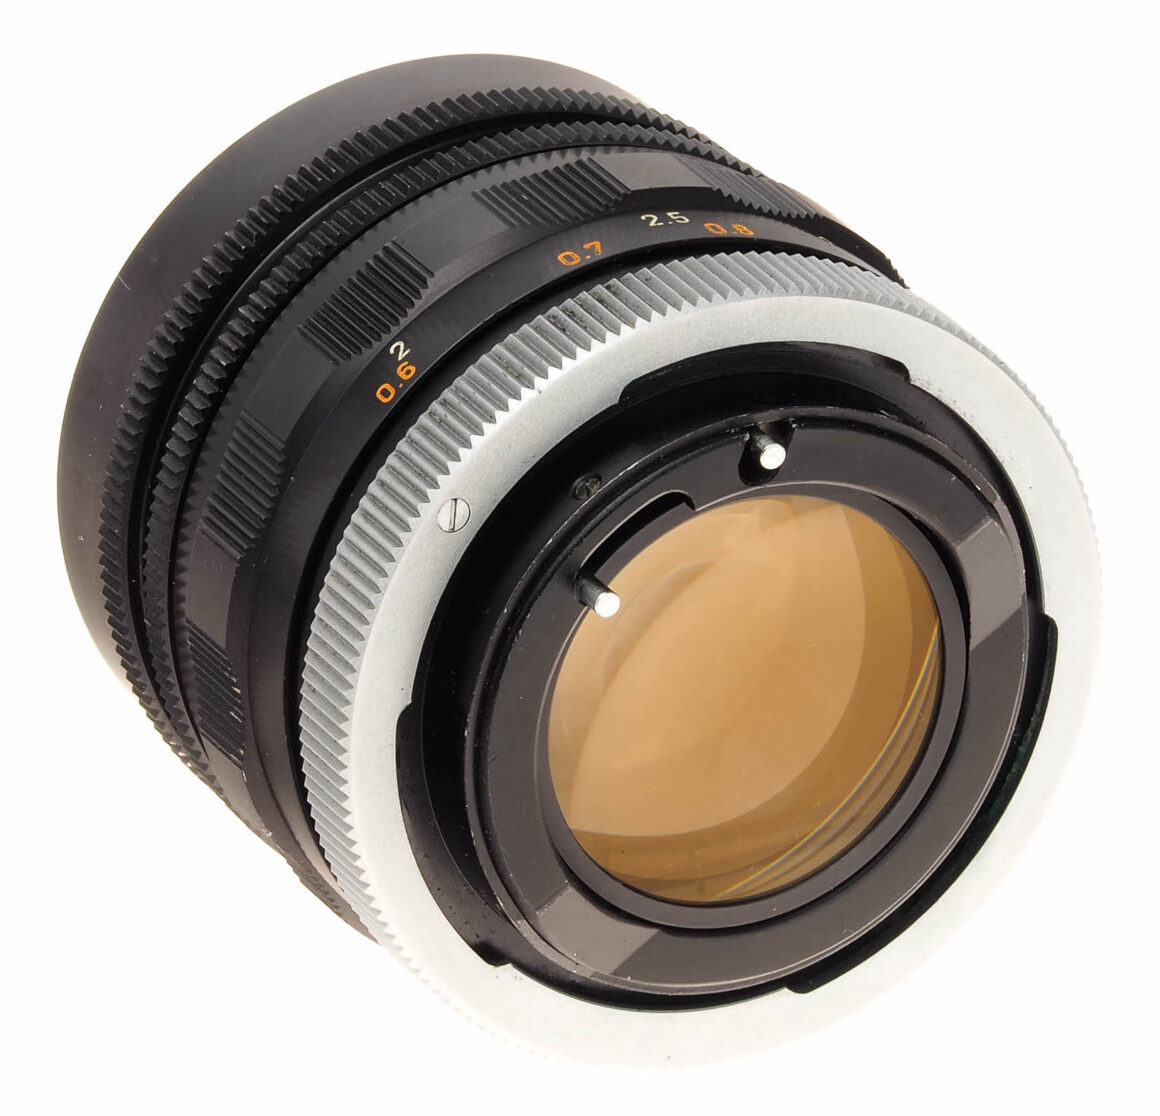 Canon Super-Canomatic R 58mm F/1.2 | LENS-DB.COM